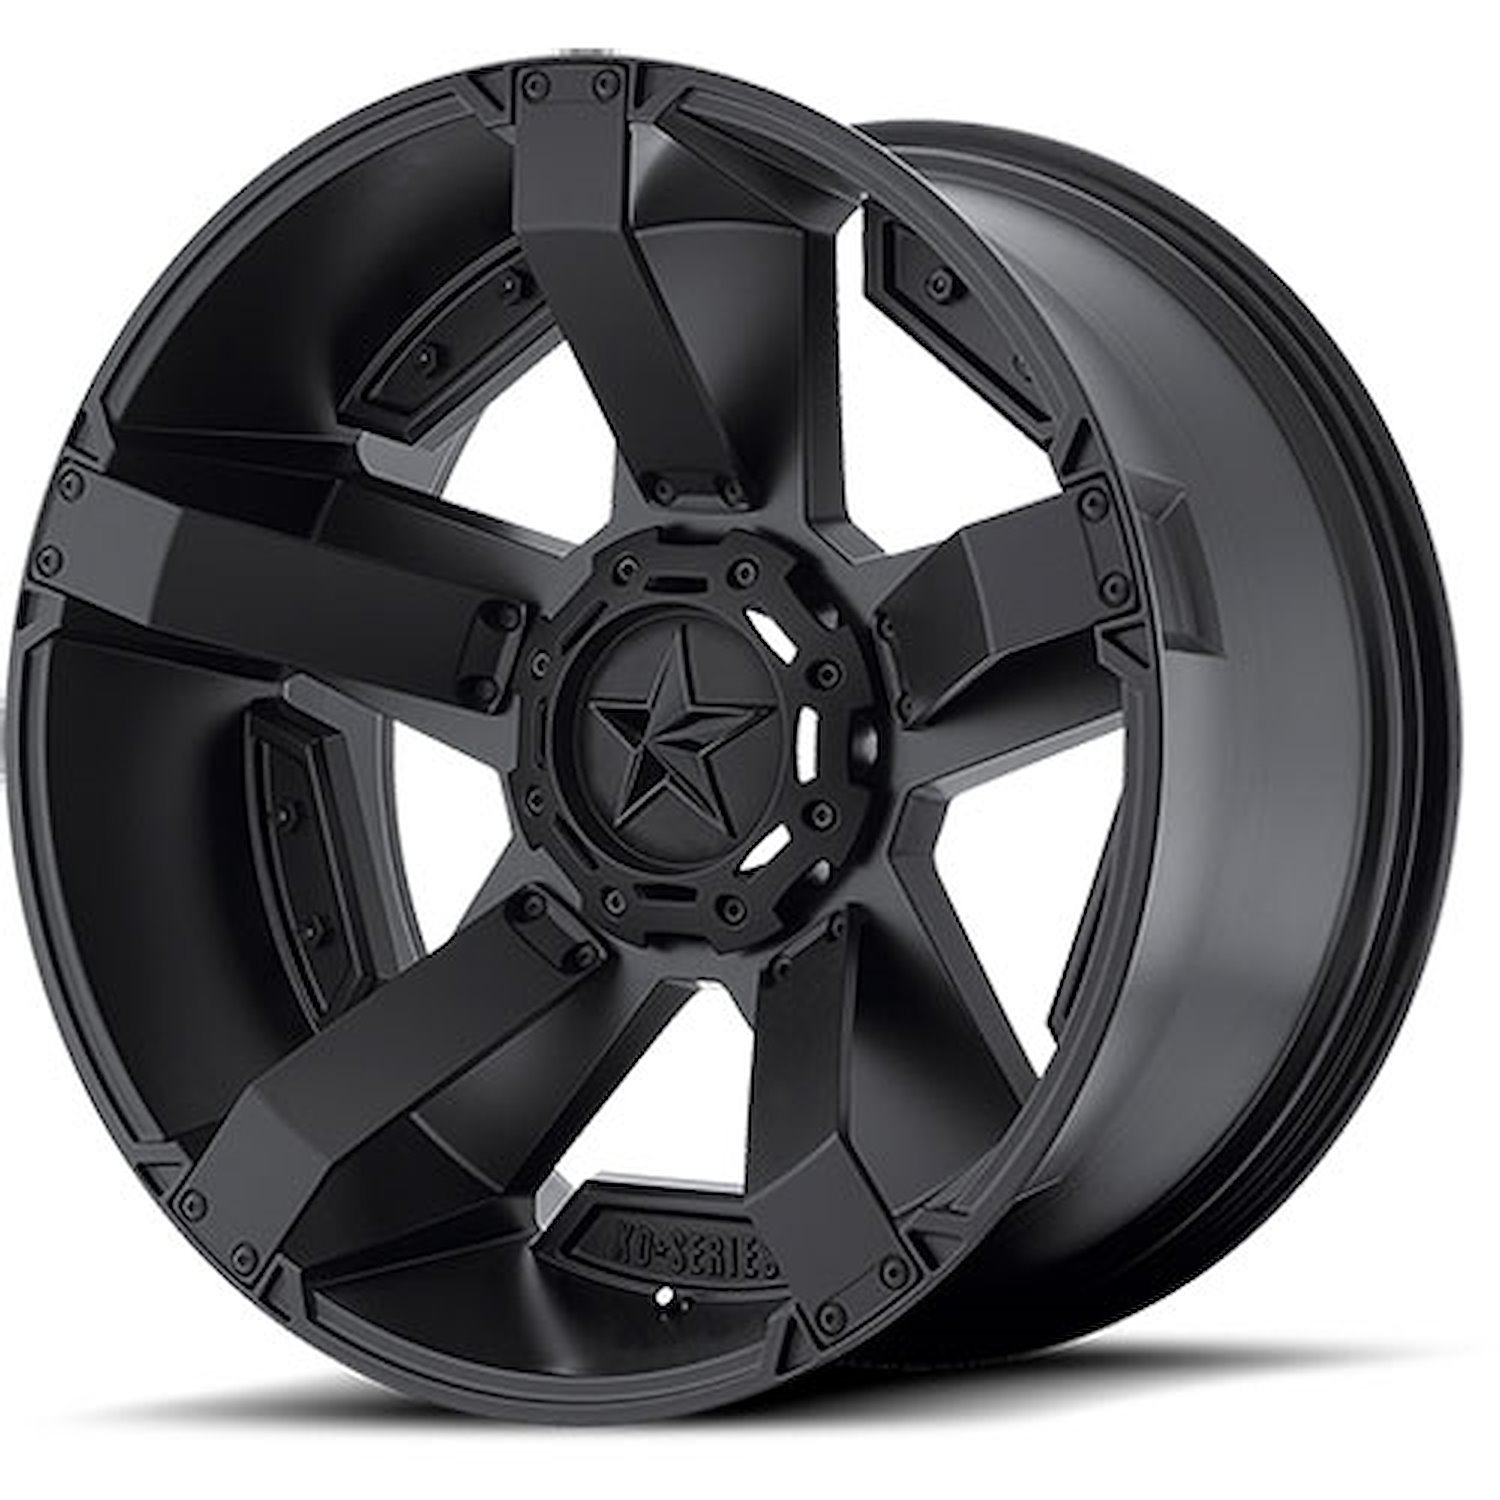 XD811 Series RS2 Rockstar Wheel Size: 20" x 12"